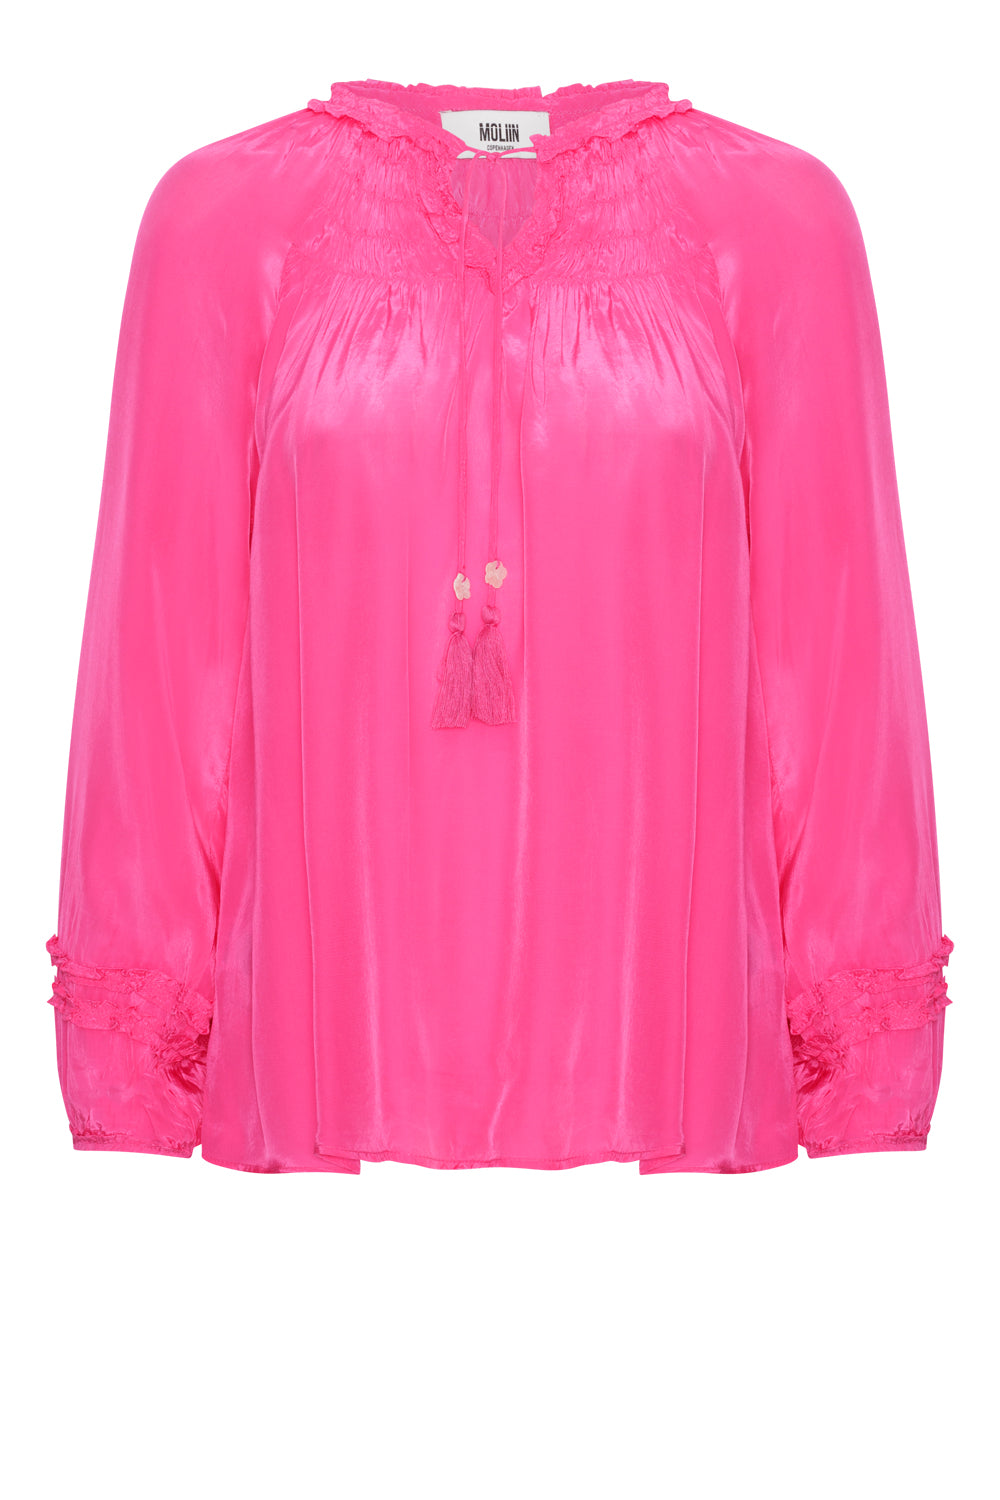 Moliin Shirt Venus Pink €135